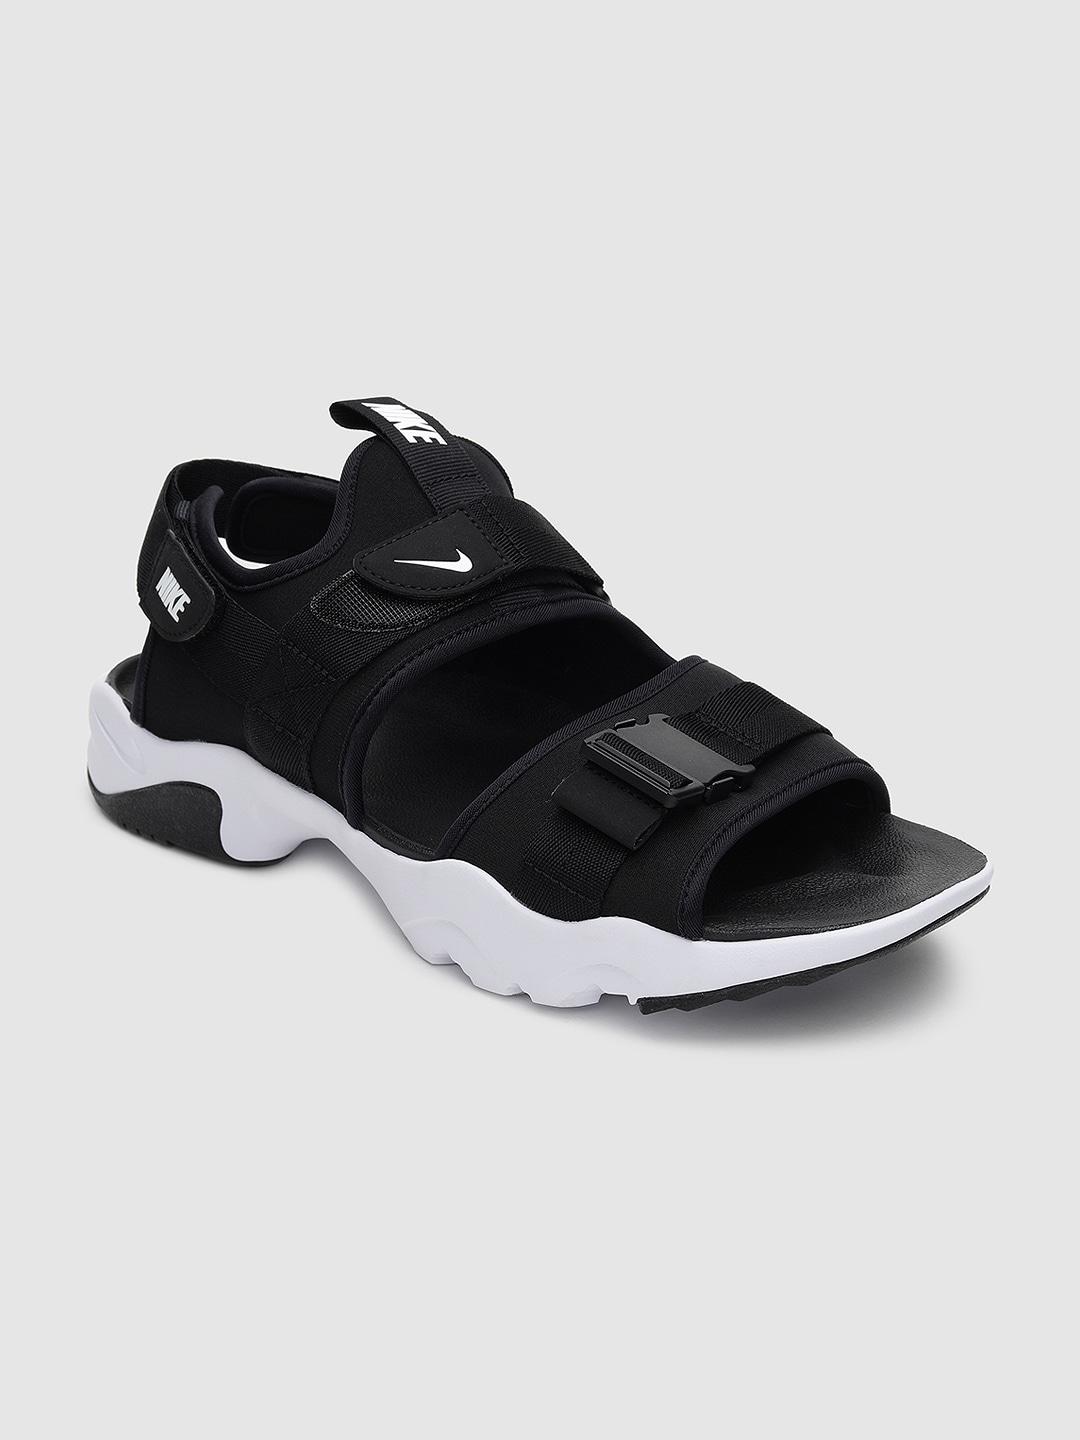 nike-men-black-canyon-sport-sandals